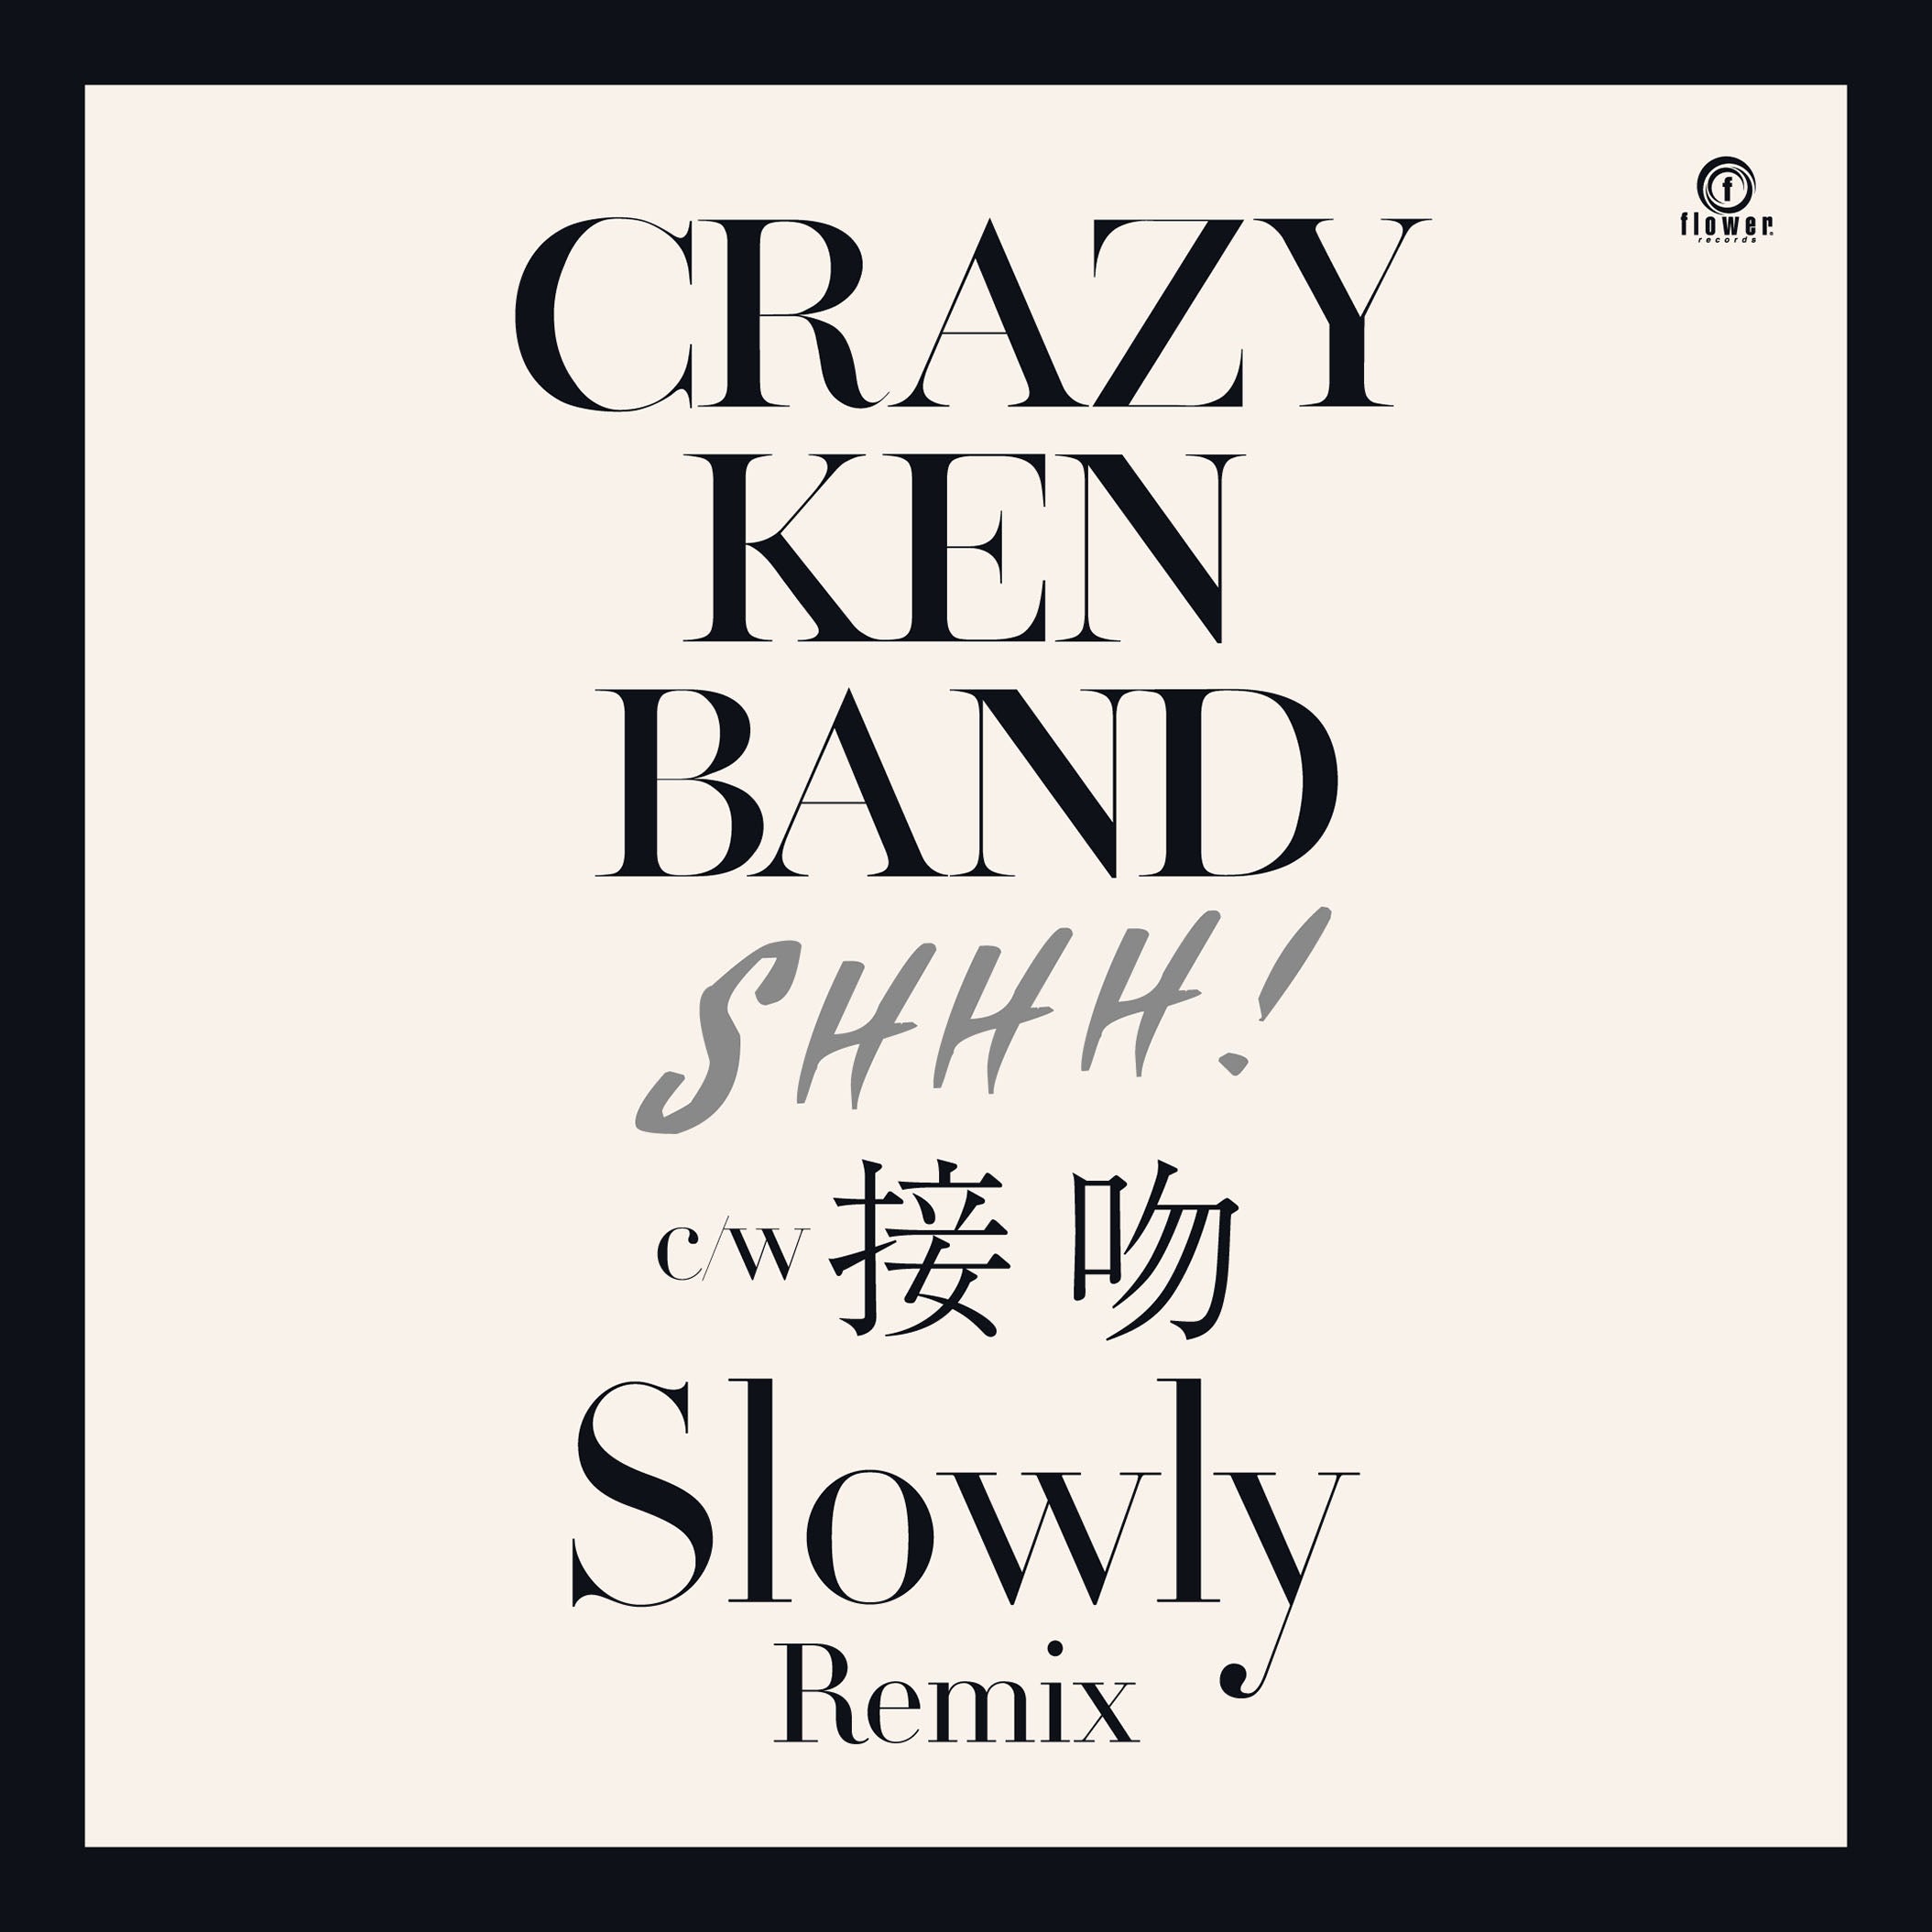 CRAZY KEN BAND - SHHH! / 接吻 (Slowly Remix)